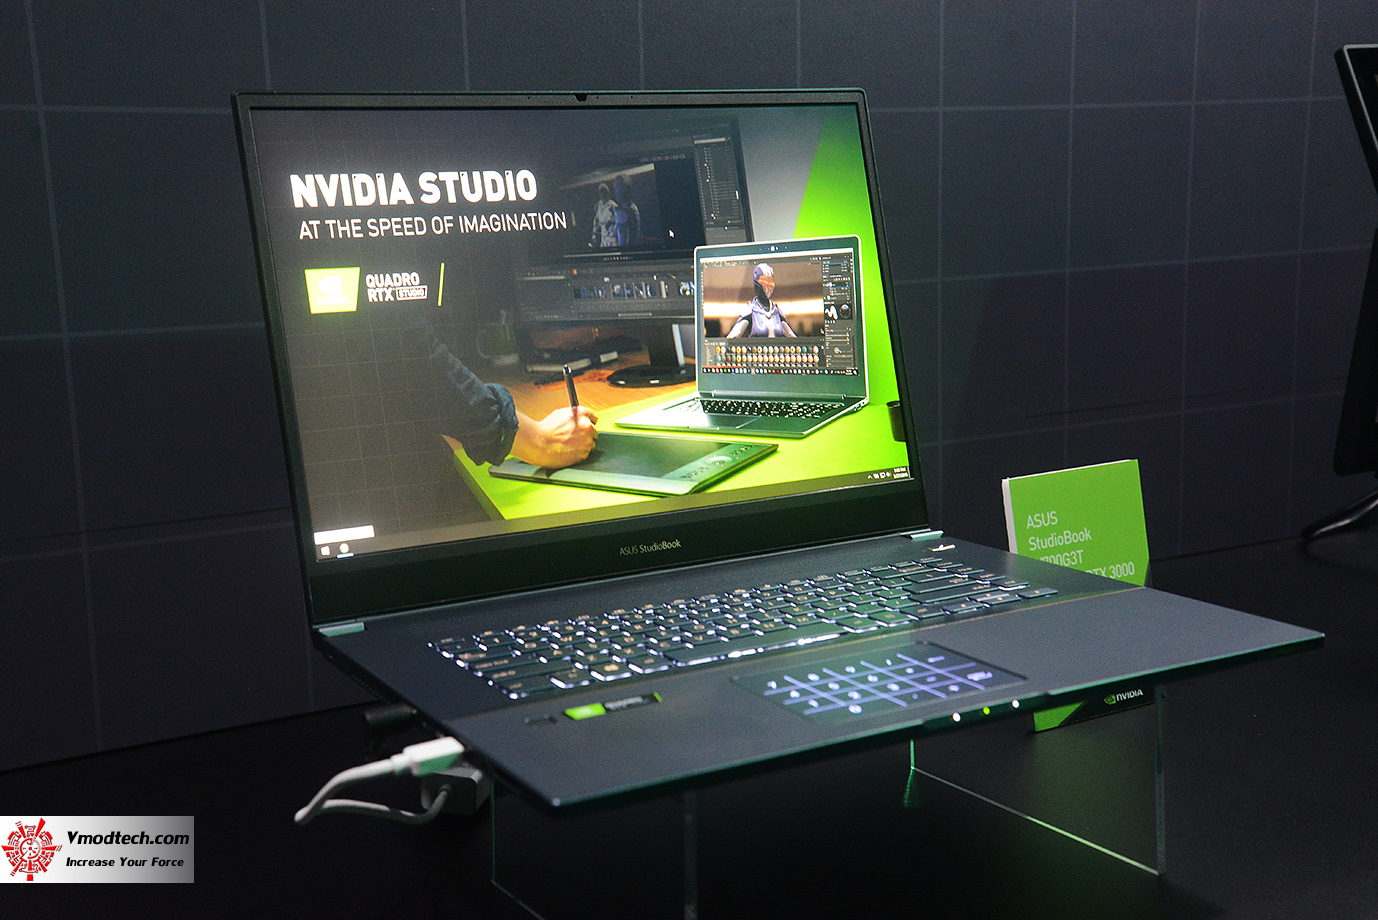 dsc 1213 Nvidia@Computex2019 เยี่ยมชมการเปิดตัว Nvidia Studio Laptop กับบรรดาแล๊ปท๊อปชื่อดังมากถึง 17รุ่นเพื่อสายตัดต่อโดยเฉพาะ!!